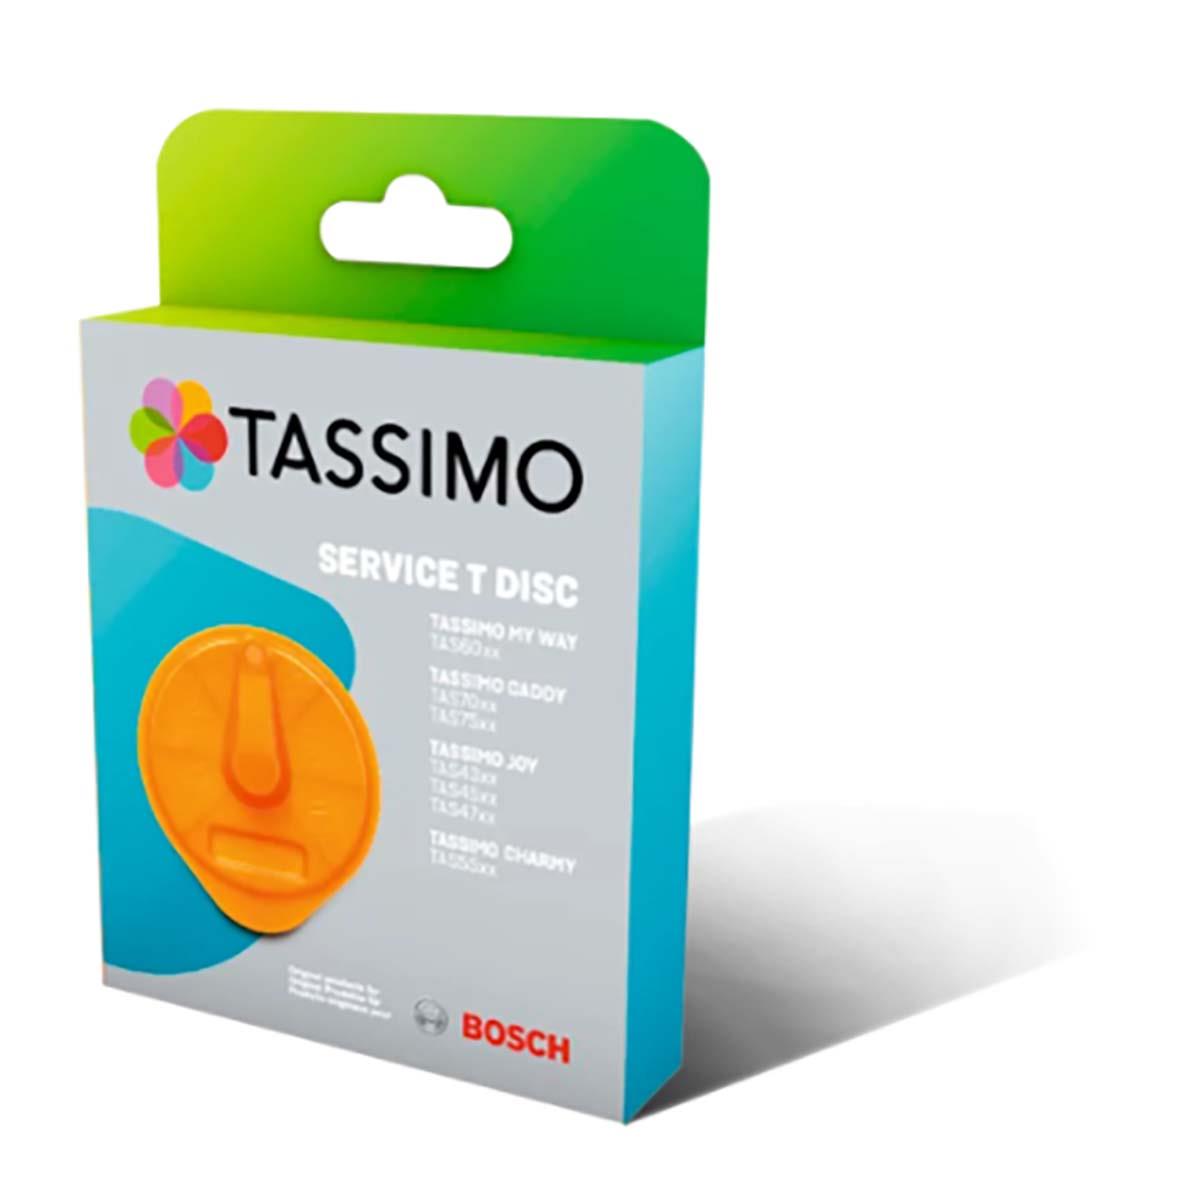 Bosch Replacement 576837 Service T-Disc for Tassimo Coffee Machine Orange